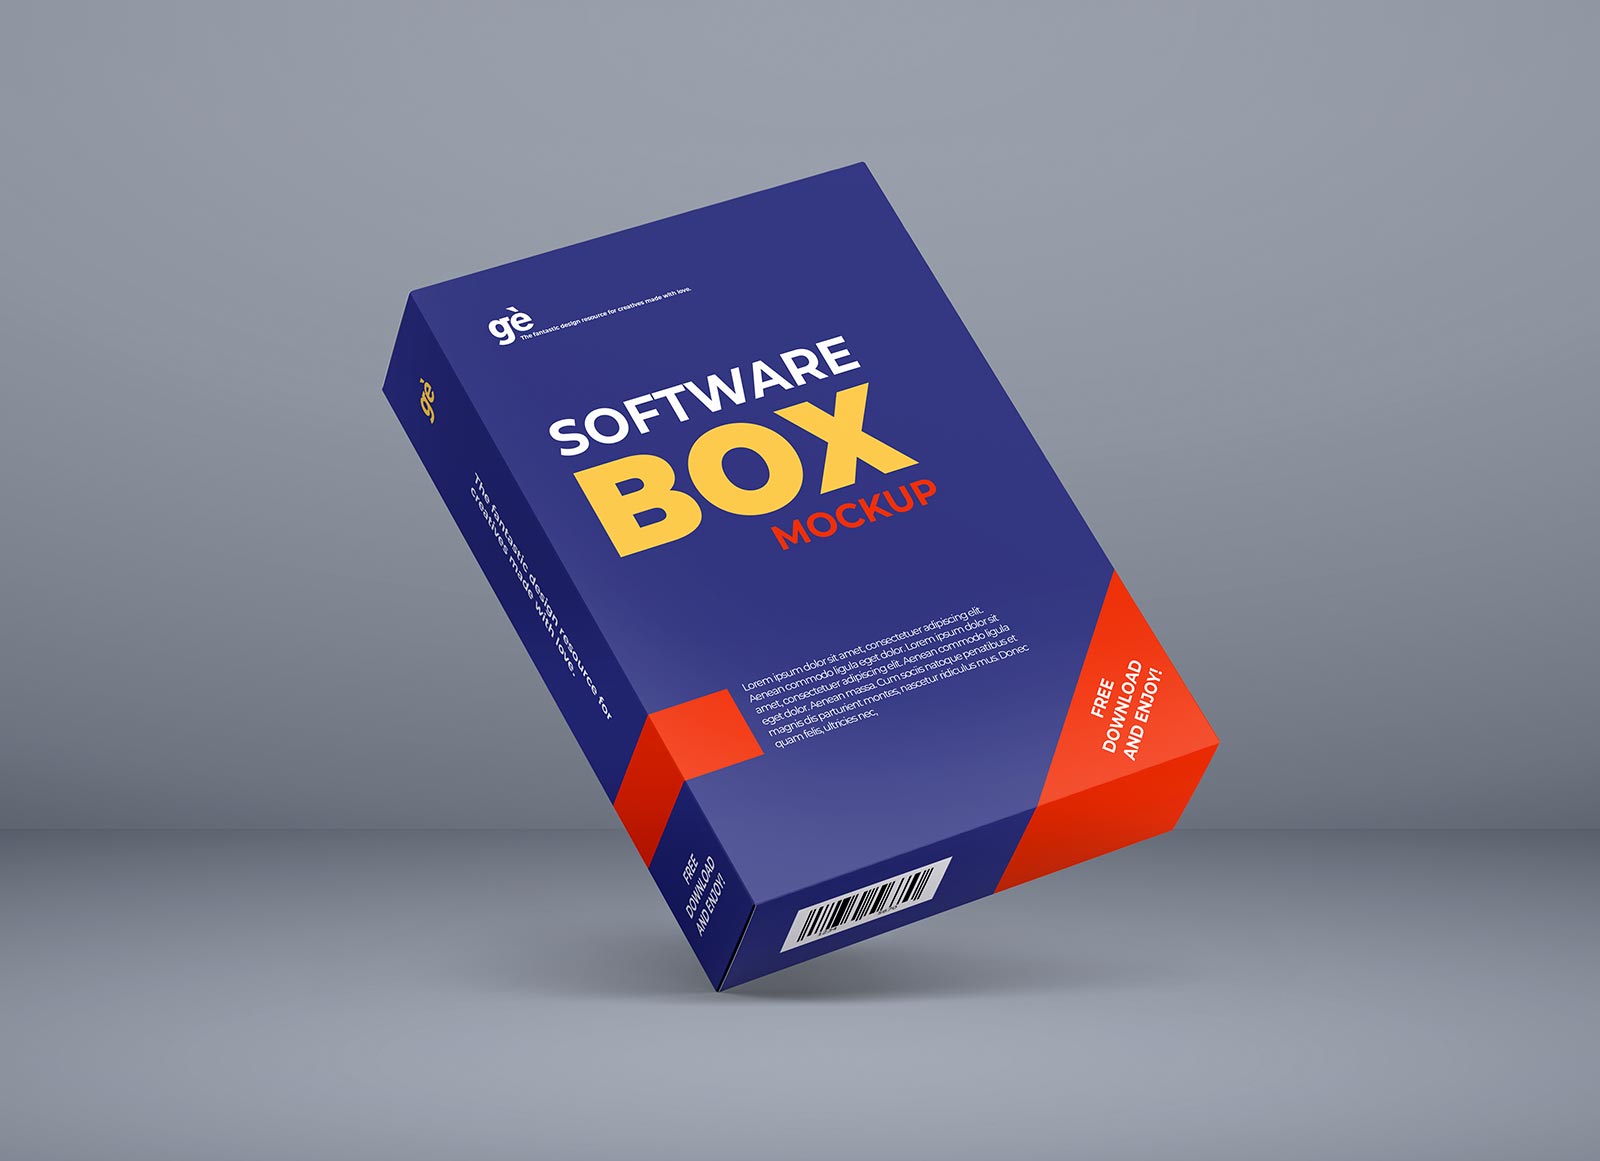 Download Free Floating Software Box Mockup PSD - Good Mockups